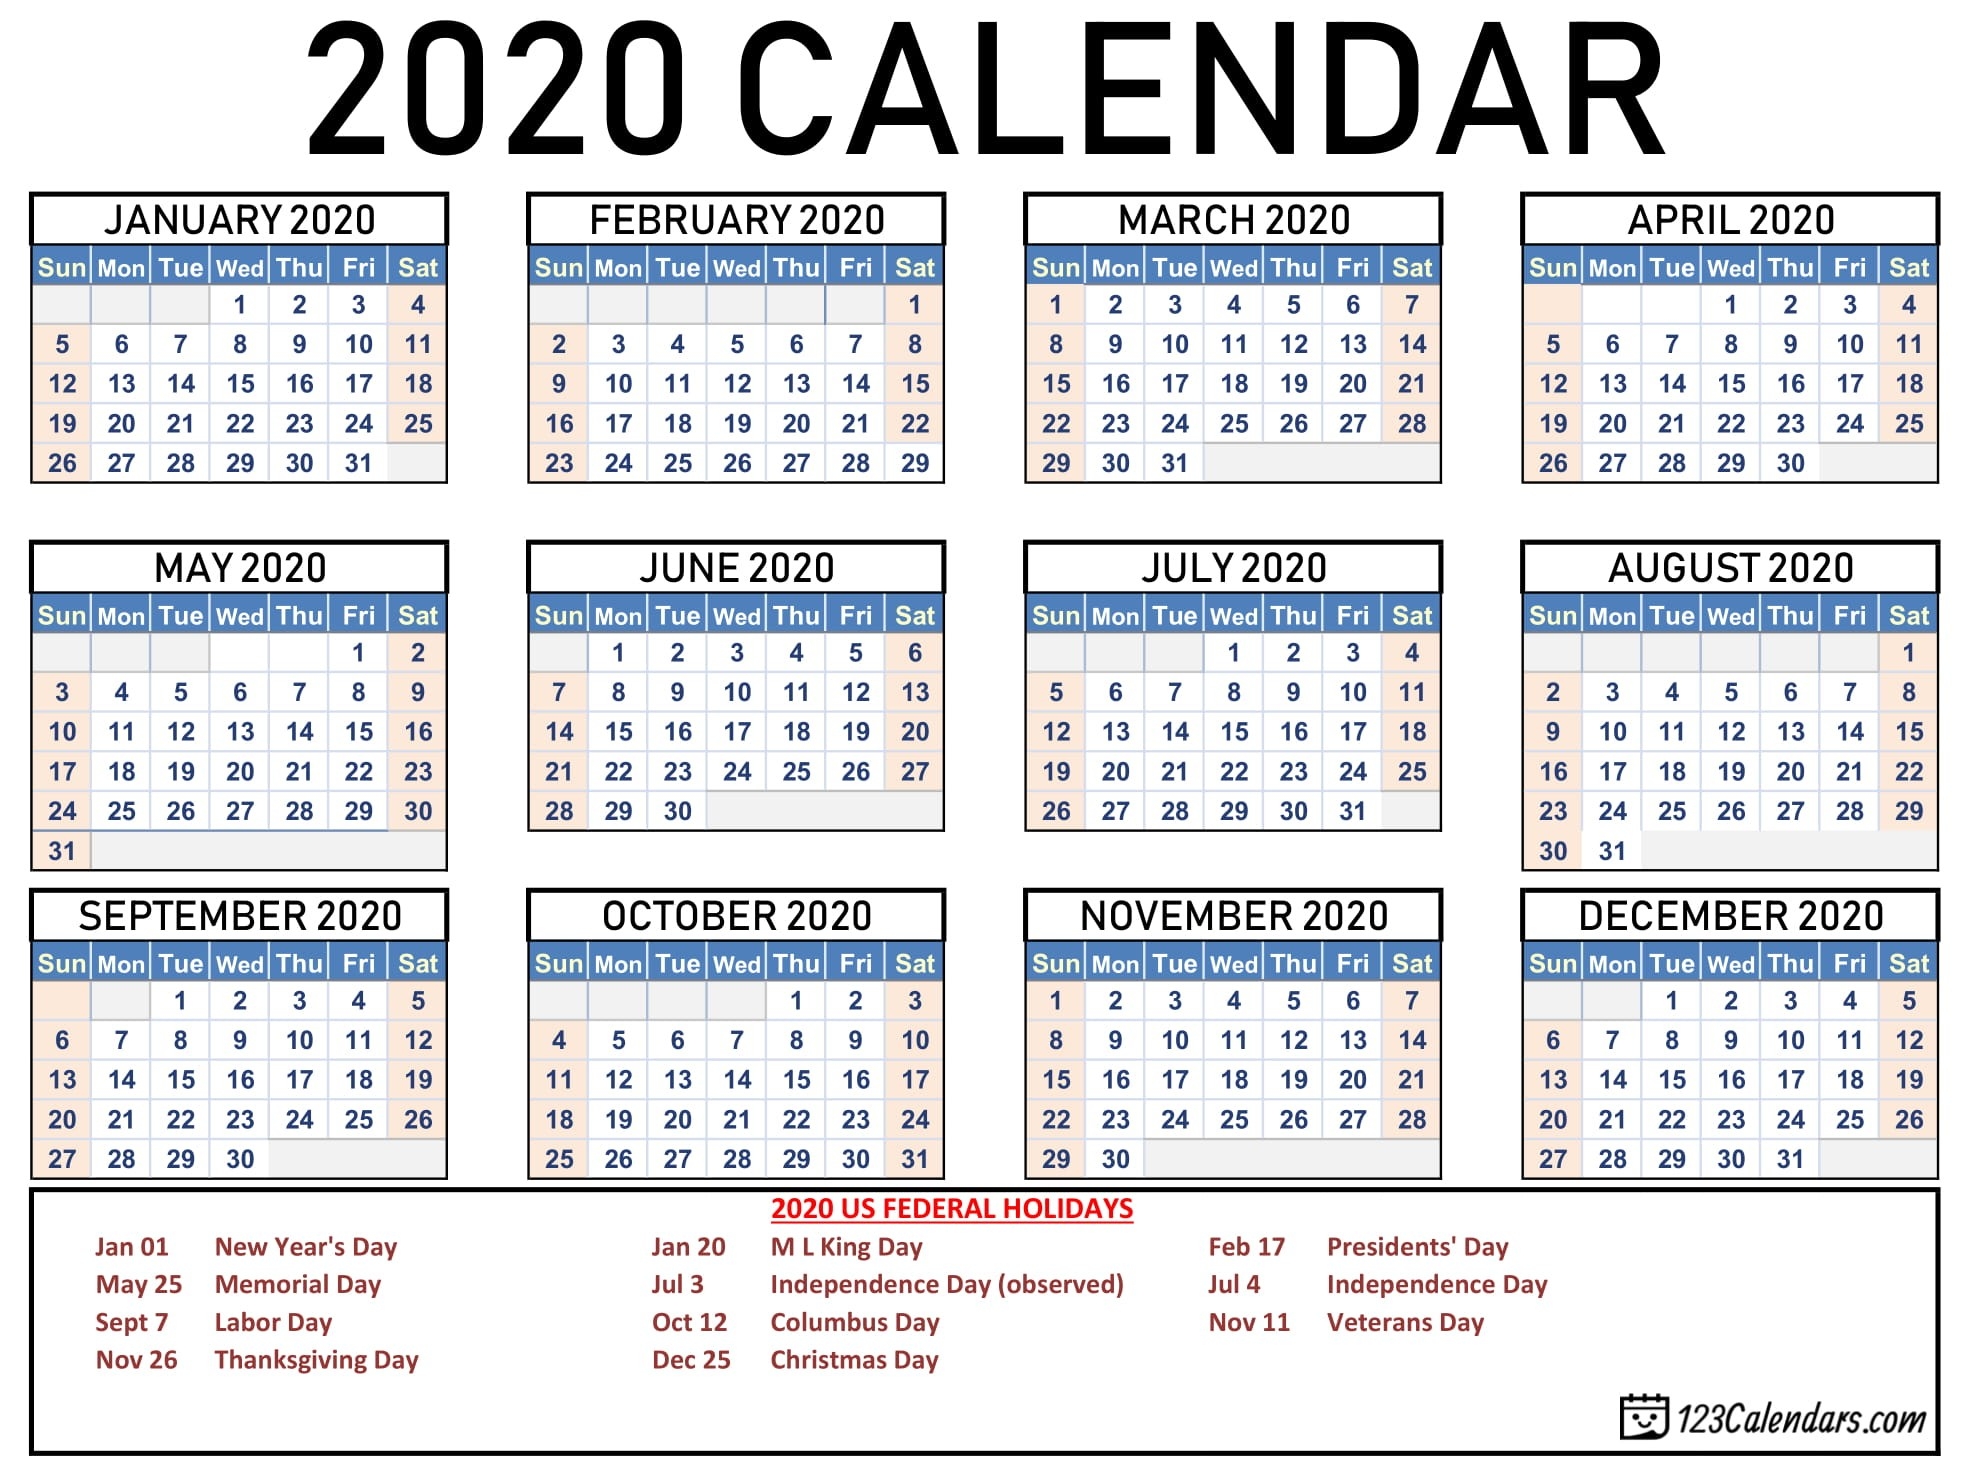 Free Printable Year 2020 Calendar | 123Calendars-2020 Calendar With Usa Legal Holidays